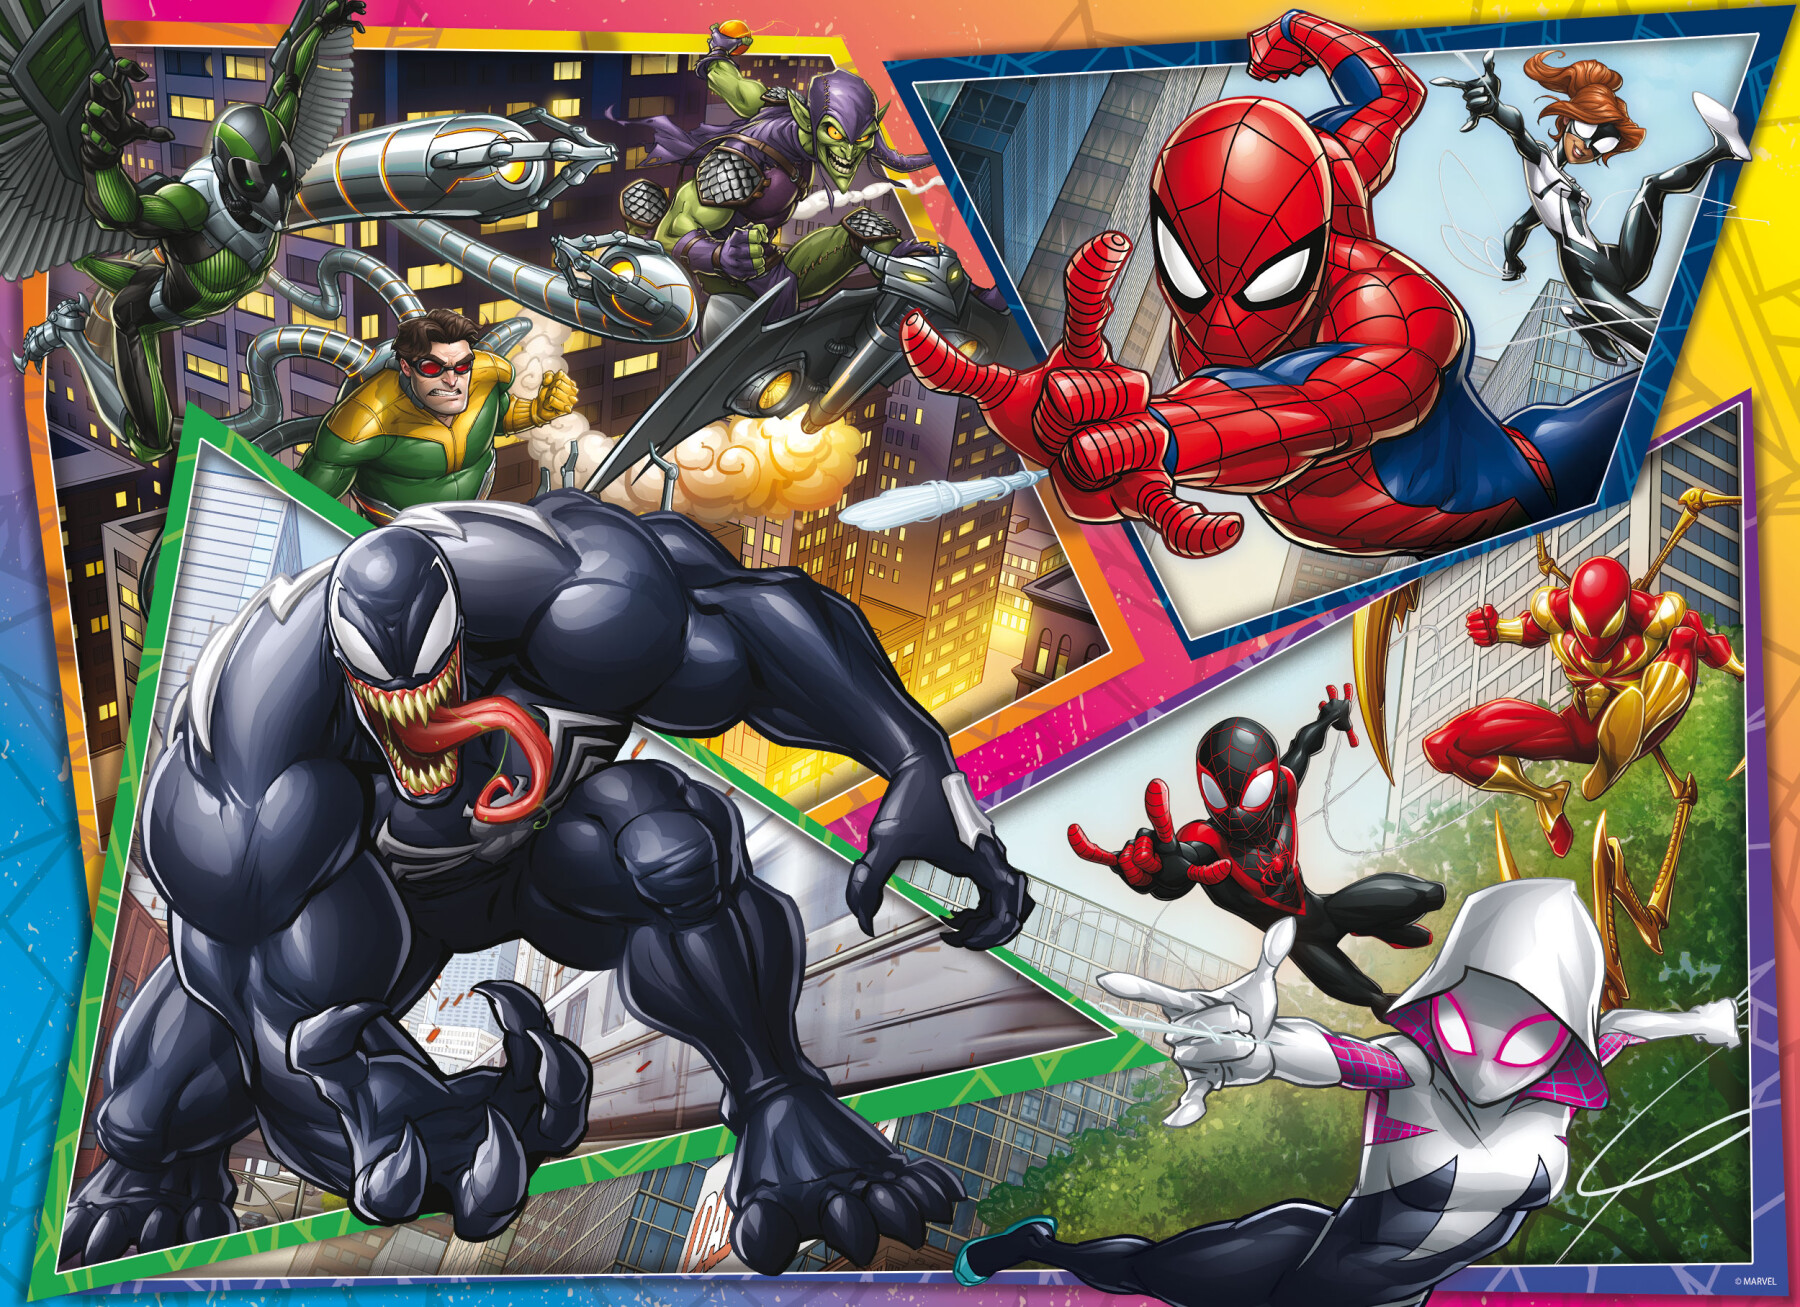 Marvel puzzle df maxi floor 150 spider-man                                                                                                                                                                                                                             - - LISCIANI, Avengers, Spiderman